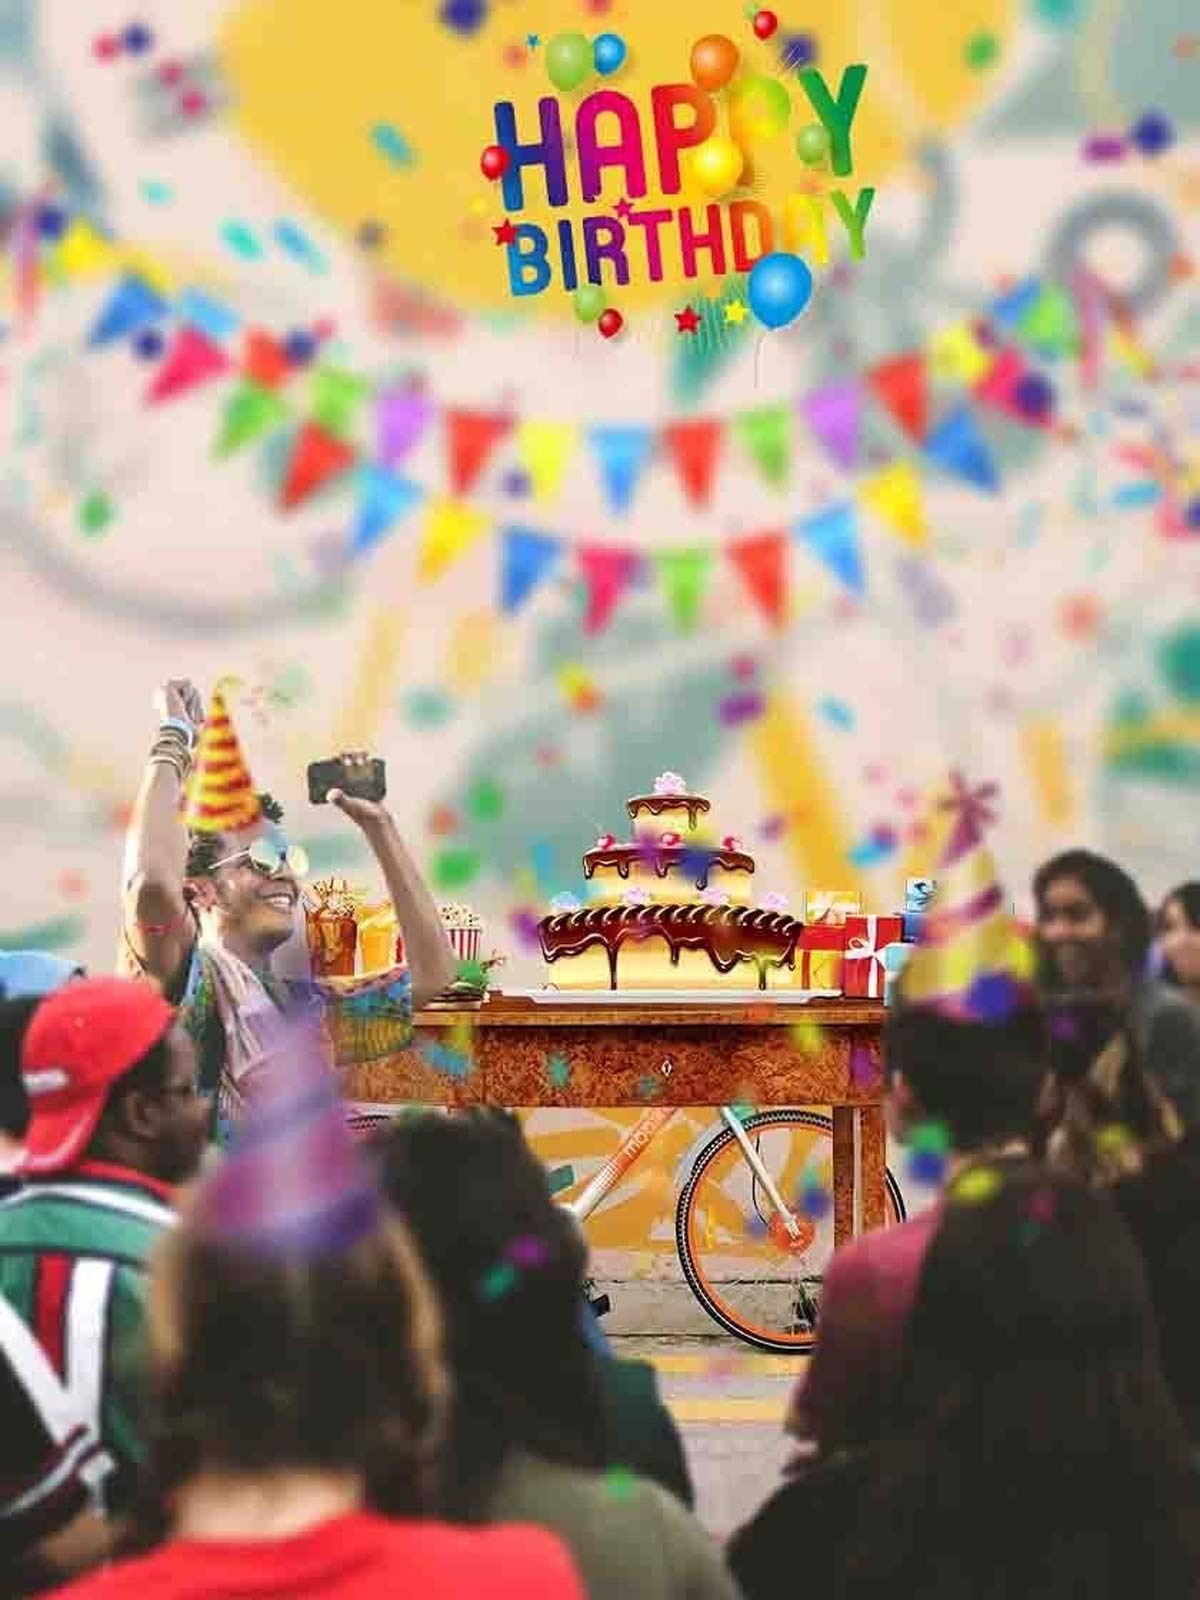 Celebrating Happy Birthday Background Full HD Blur Image